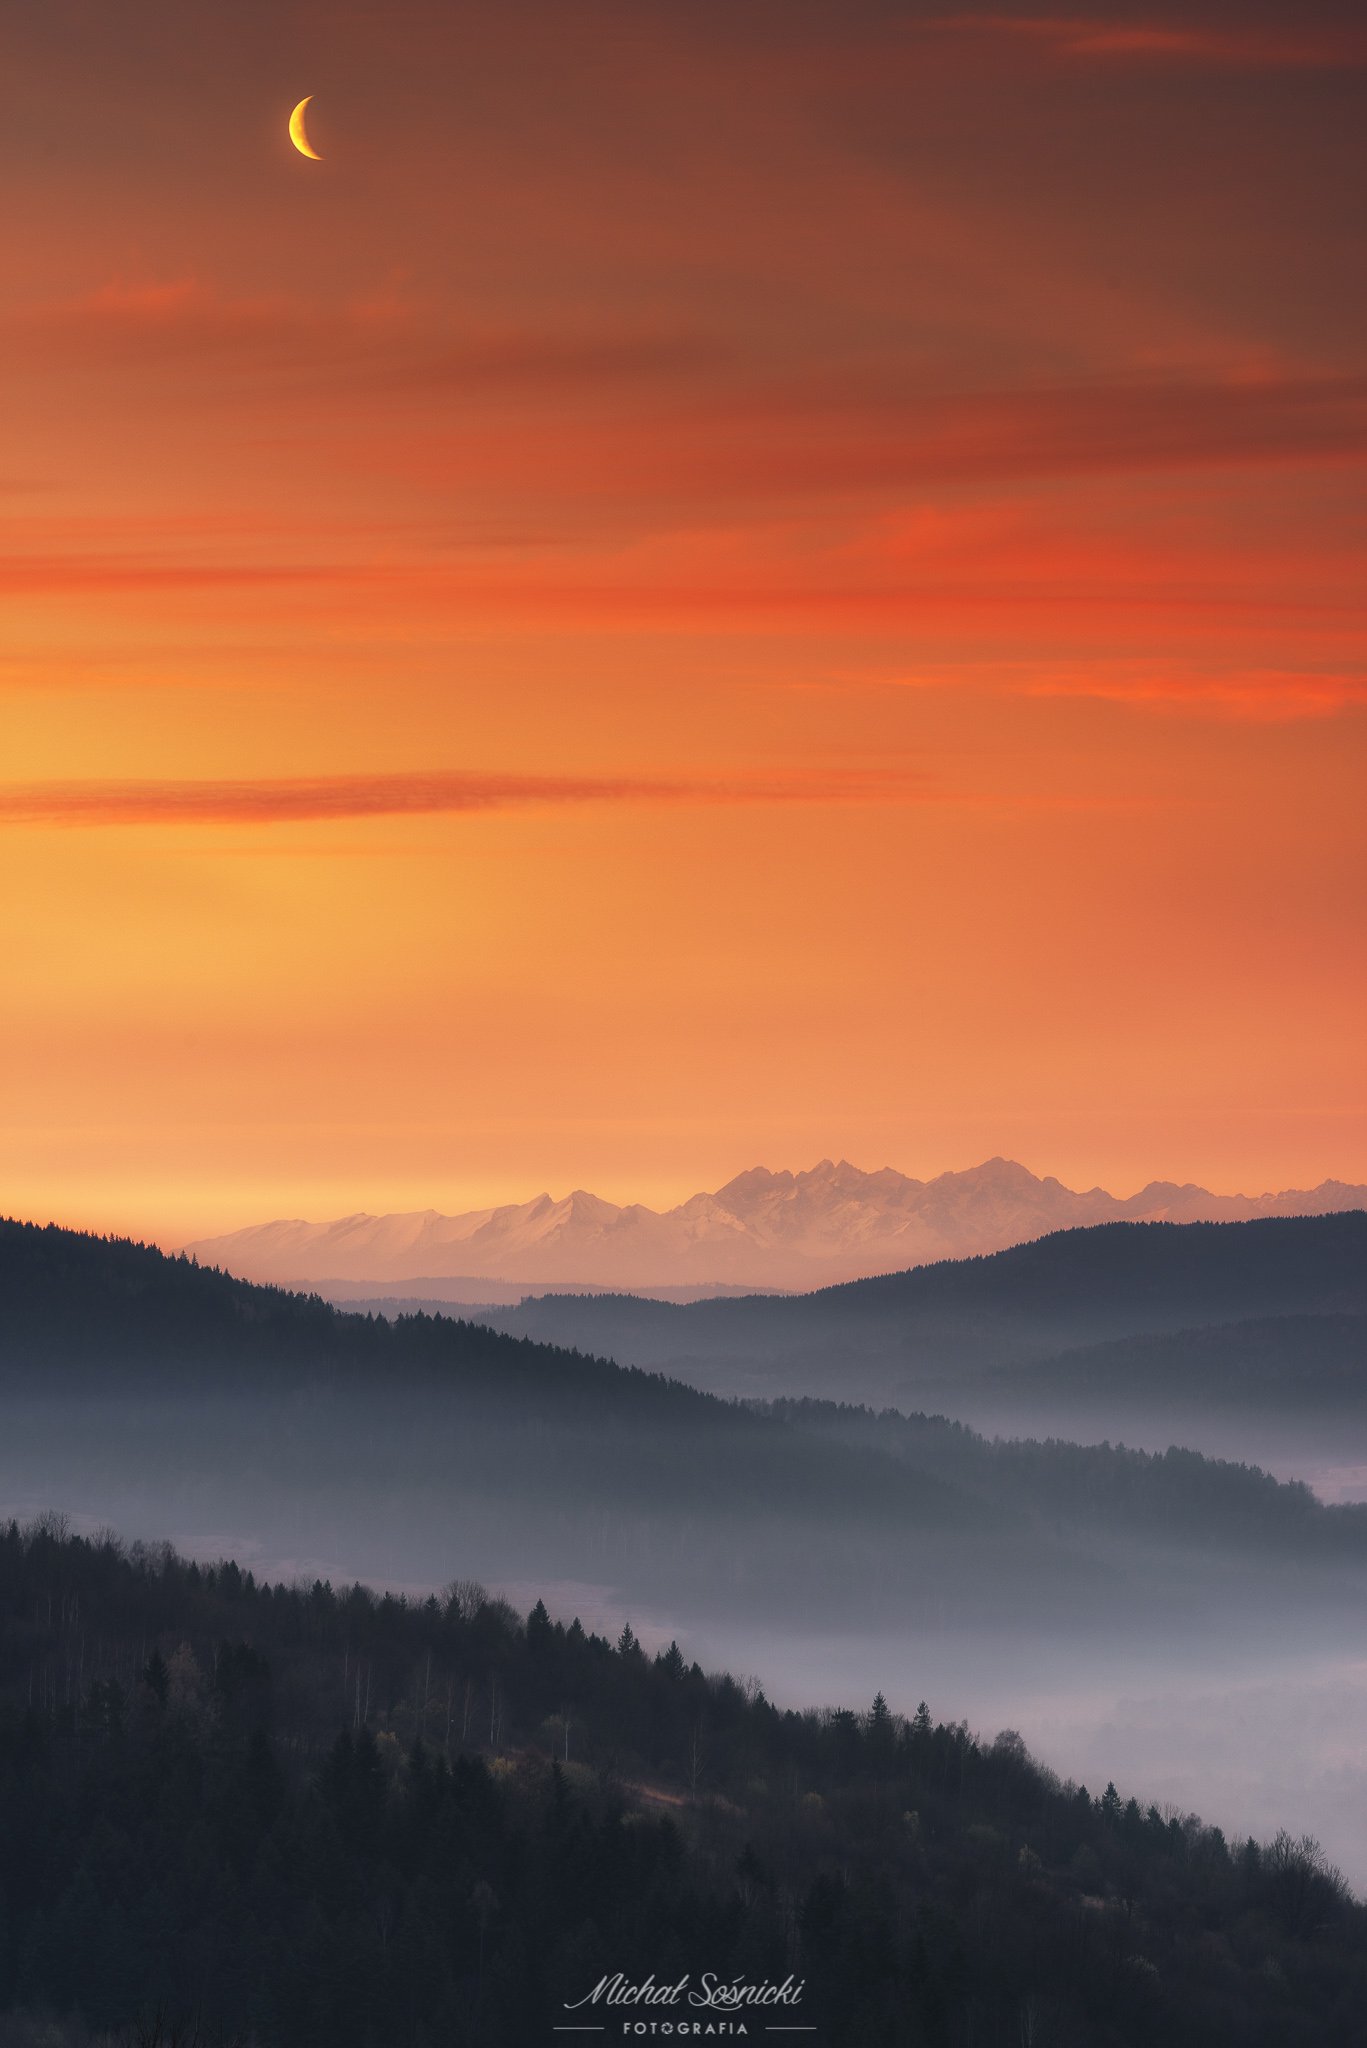 #moon #mountains #sunrise #landsacpe #color #pentax, Michał Sośnicki